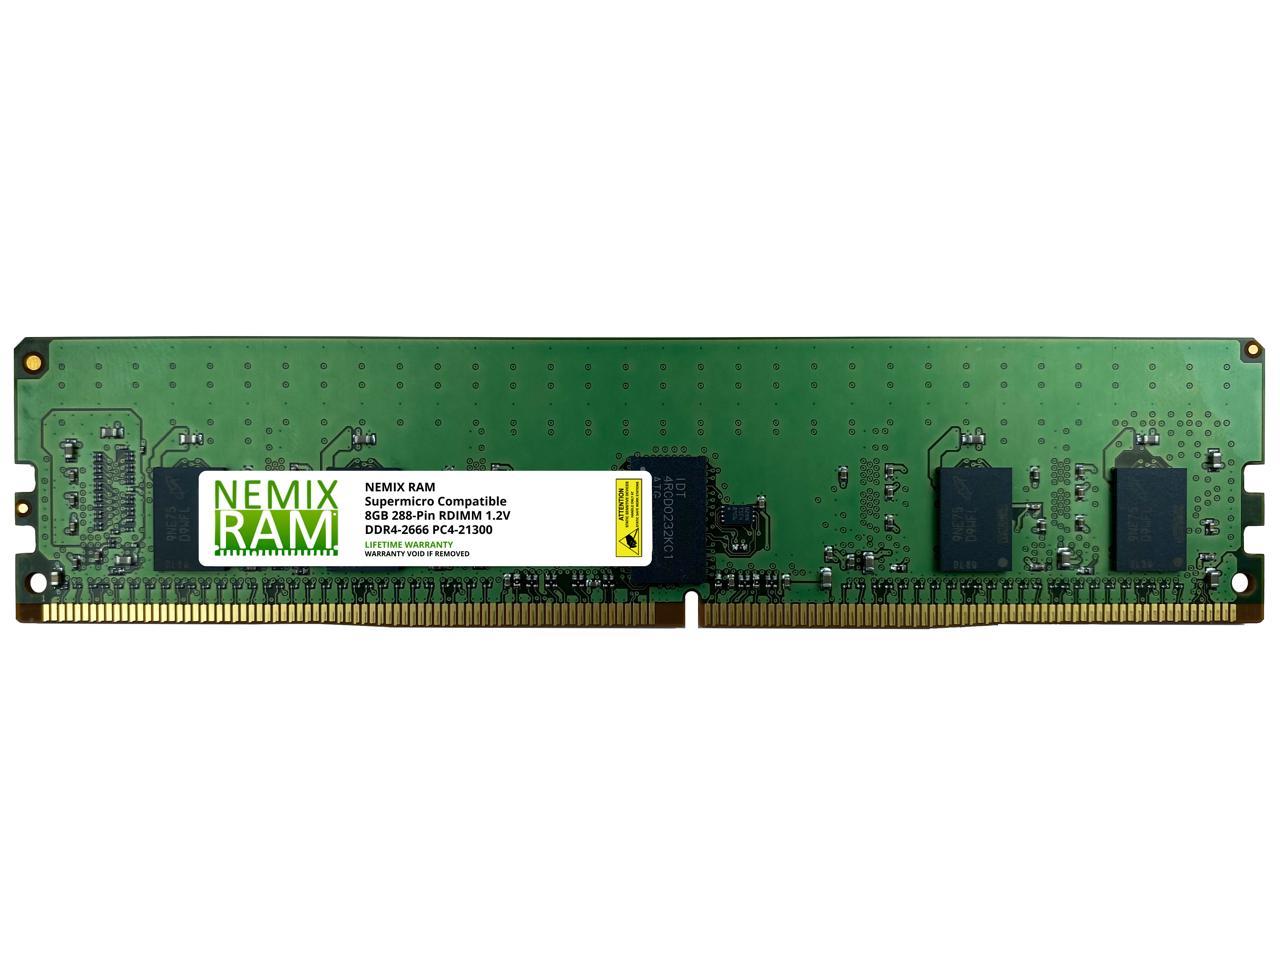 8GB DDR4-2666 PC4-21300 RDIMM Memory for Supermicro M11SDV-8C-LN4F AMD EPYC  by Nemix Ram